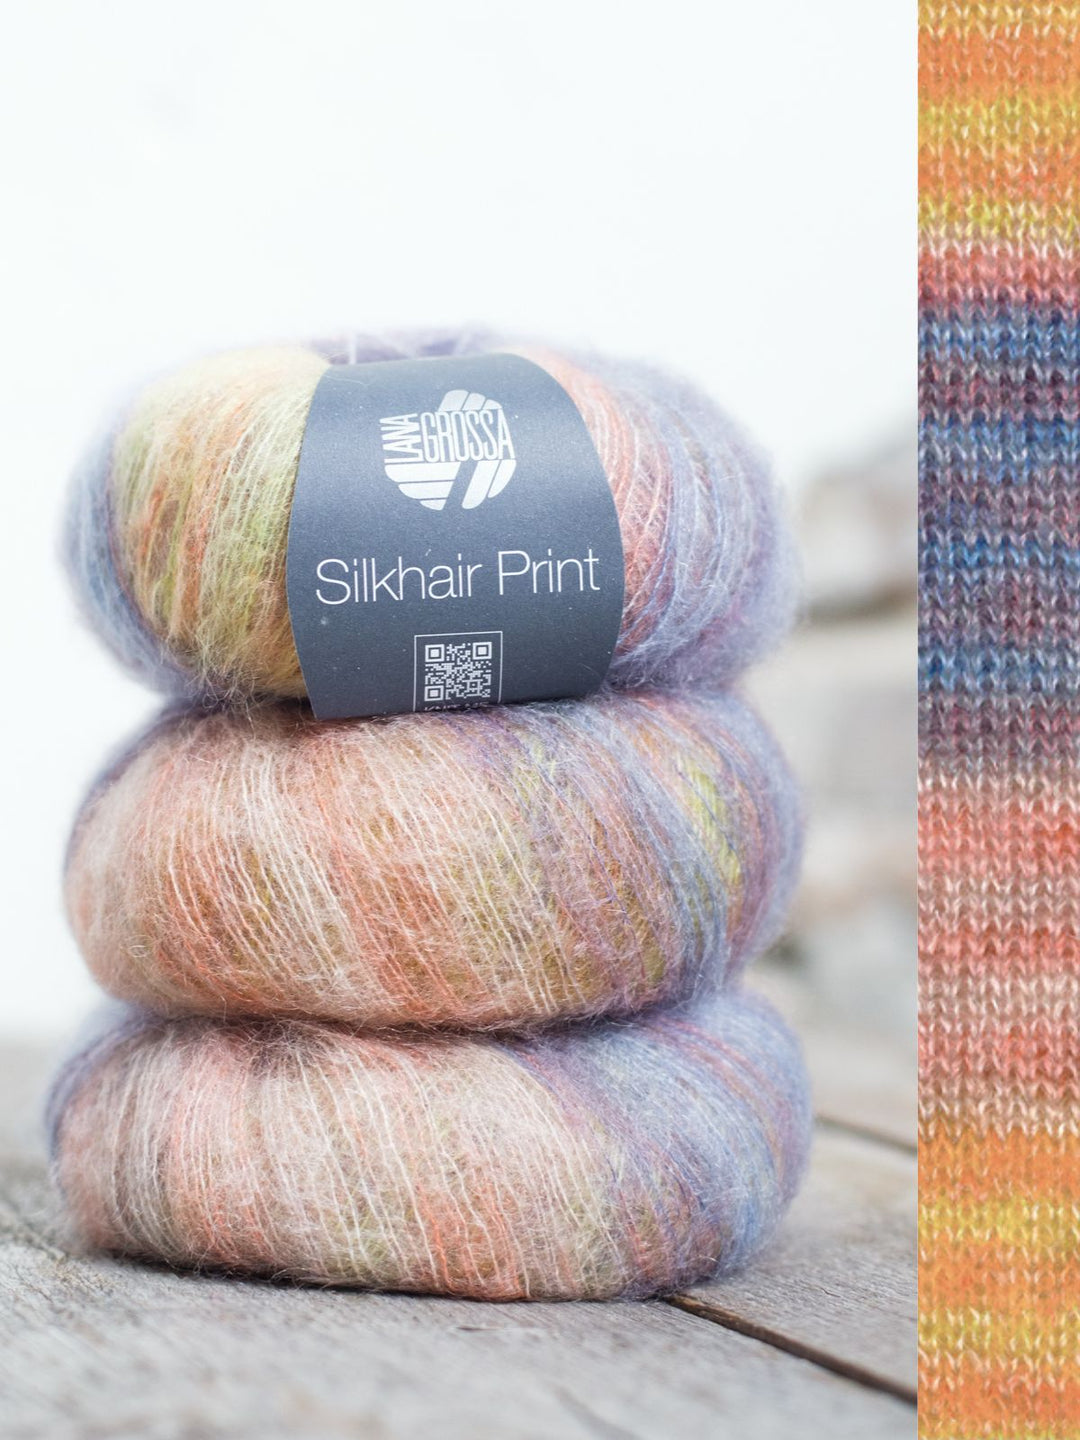 Silkhair Print 423 Geel / Oranje / Jeans